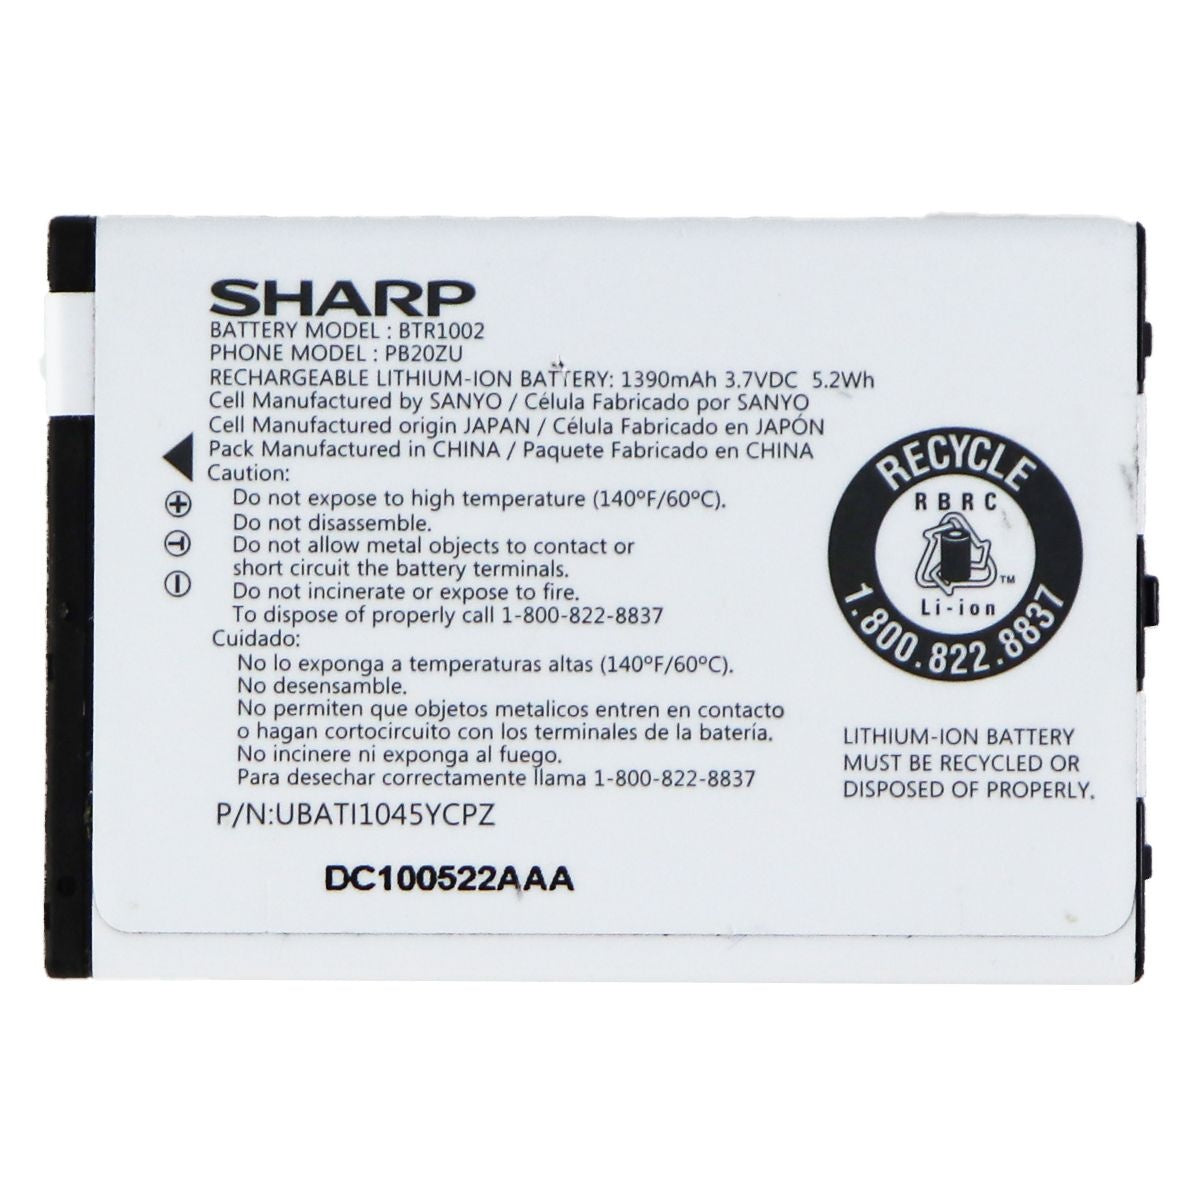 Sharp Rechargeable 3.7V 1390mAh Battery (BTR1002) / PB20ZU Cell Phone - Batteries SHARP    - Simple Cell Bulk Wholesale Pricing - USA Seller